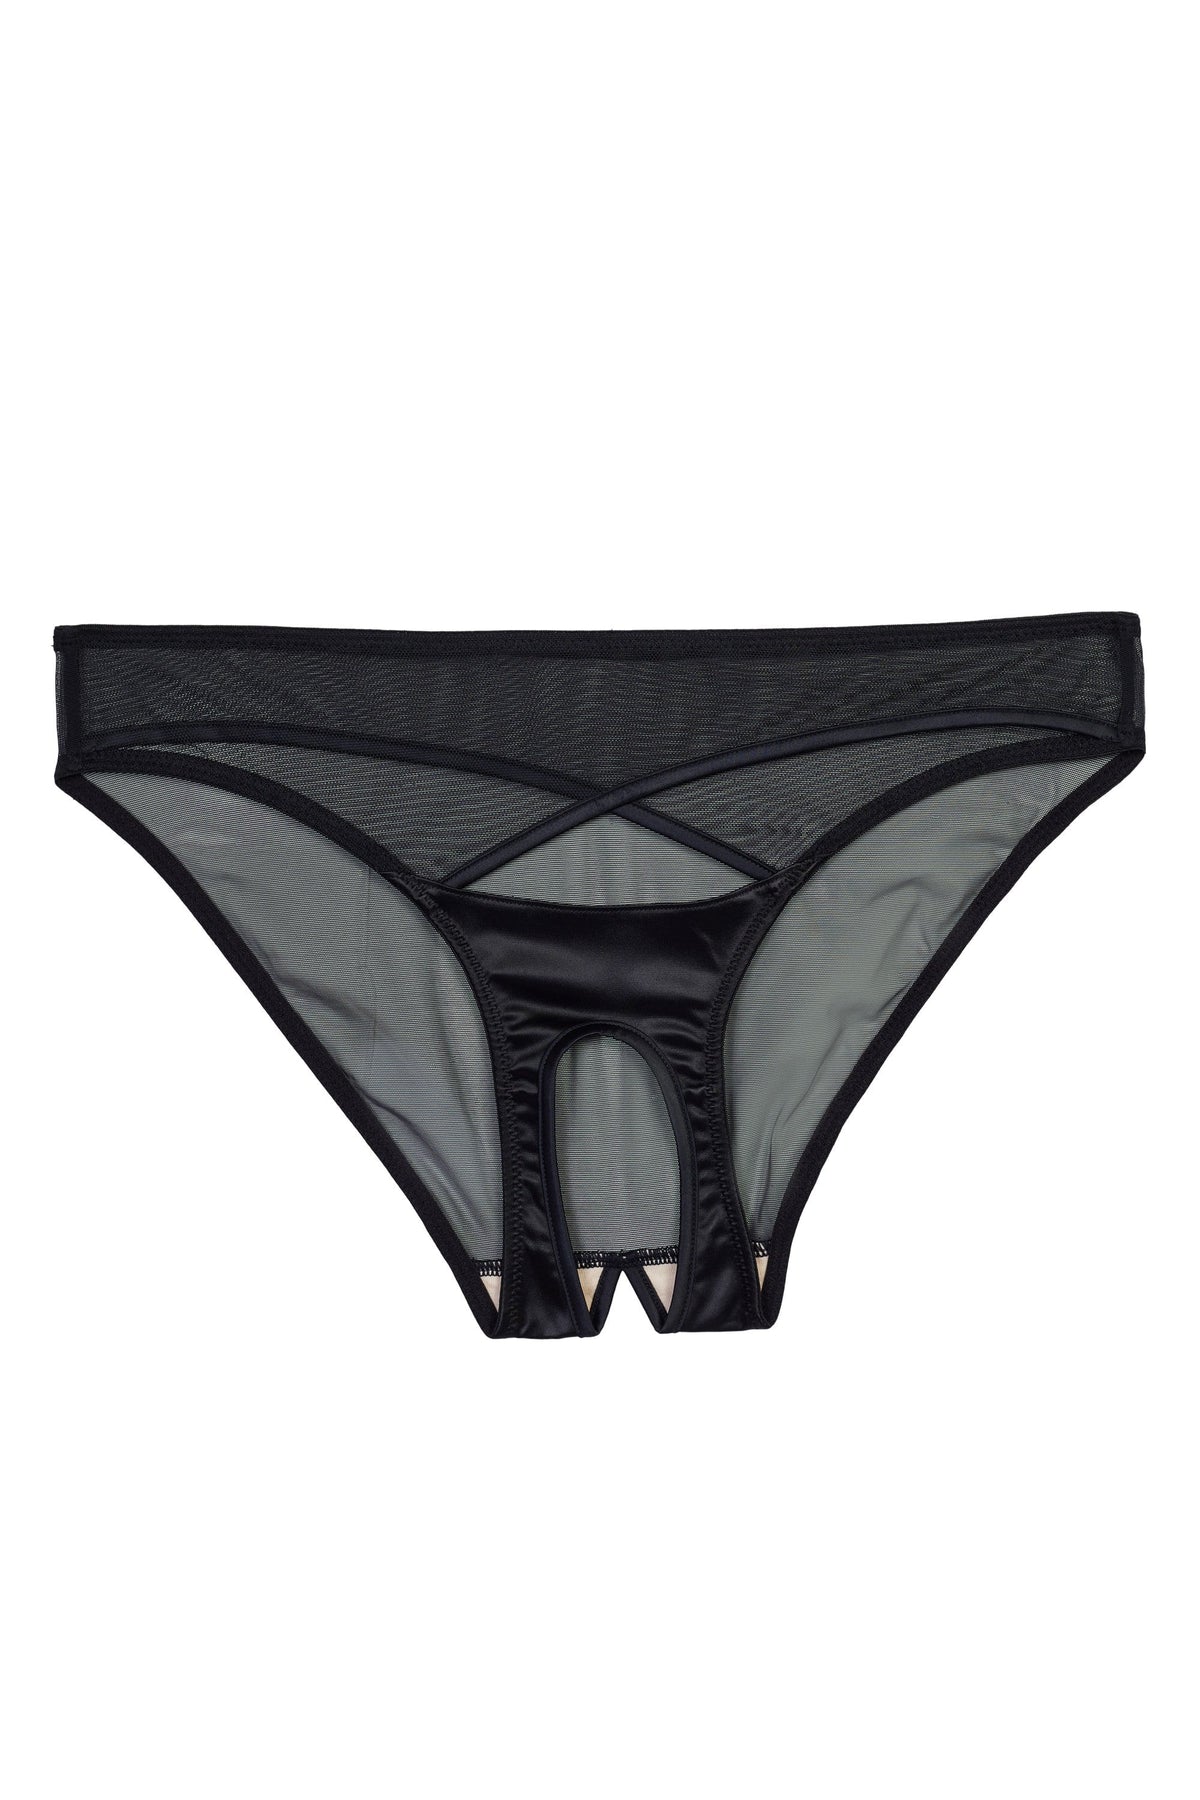 Buy Quttos PrettyCat Non Padded Plunge Bra Panty Lingerie Set Black at